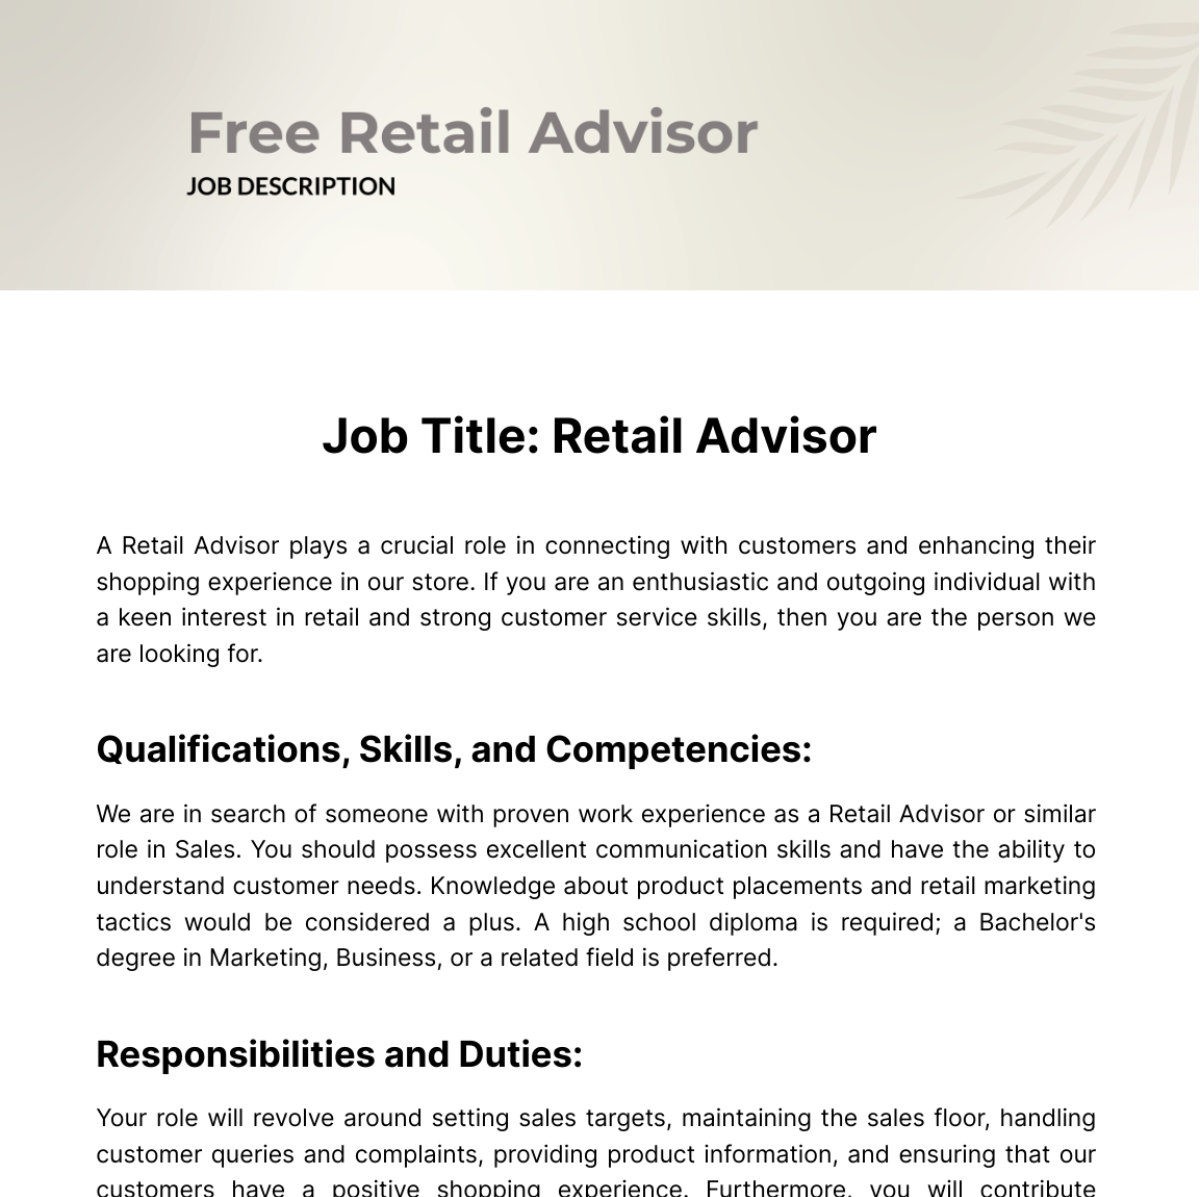 Free Retail Advisor Job Description Template